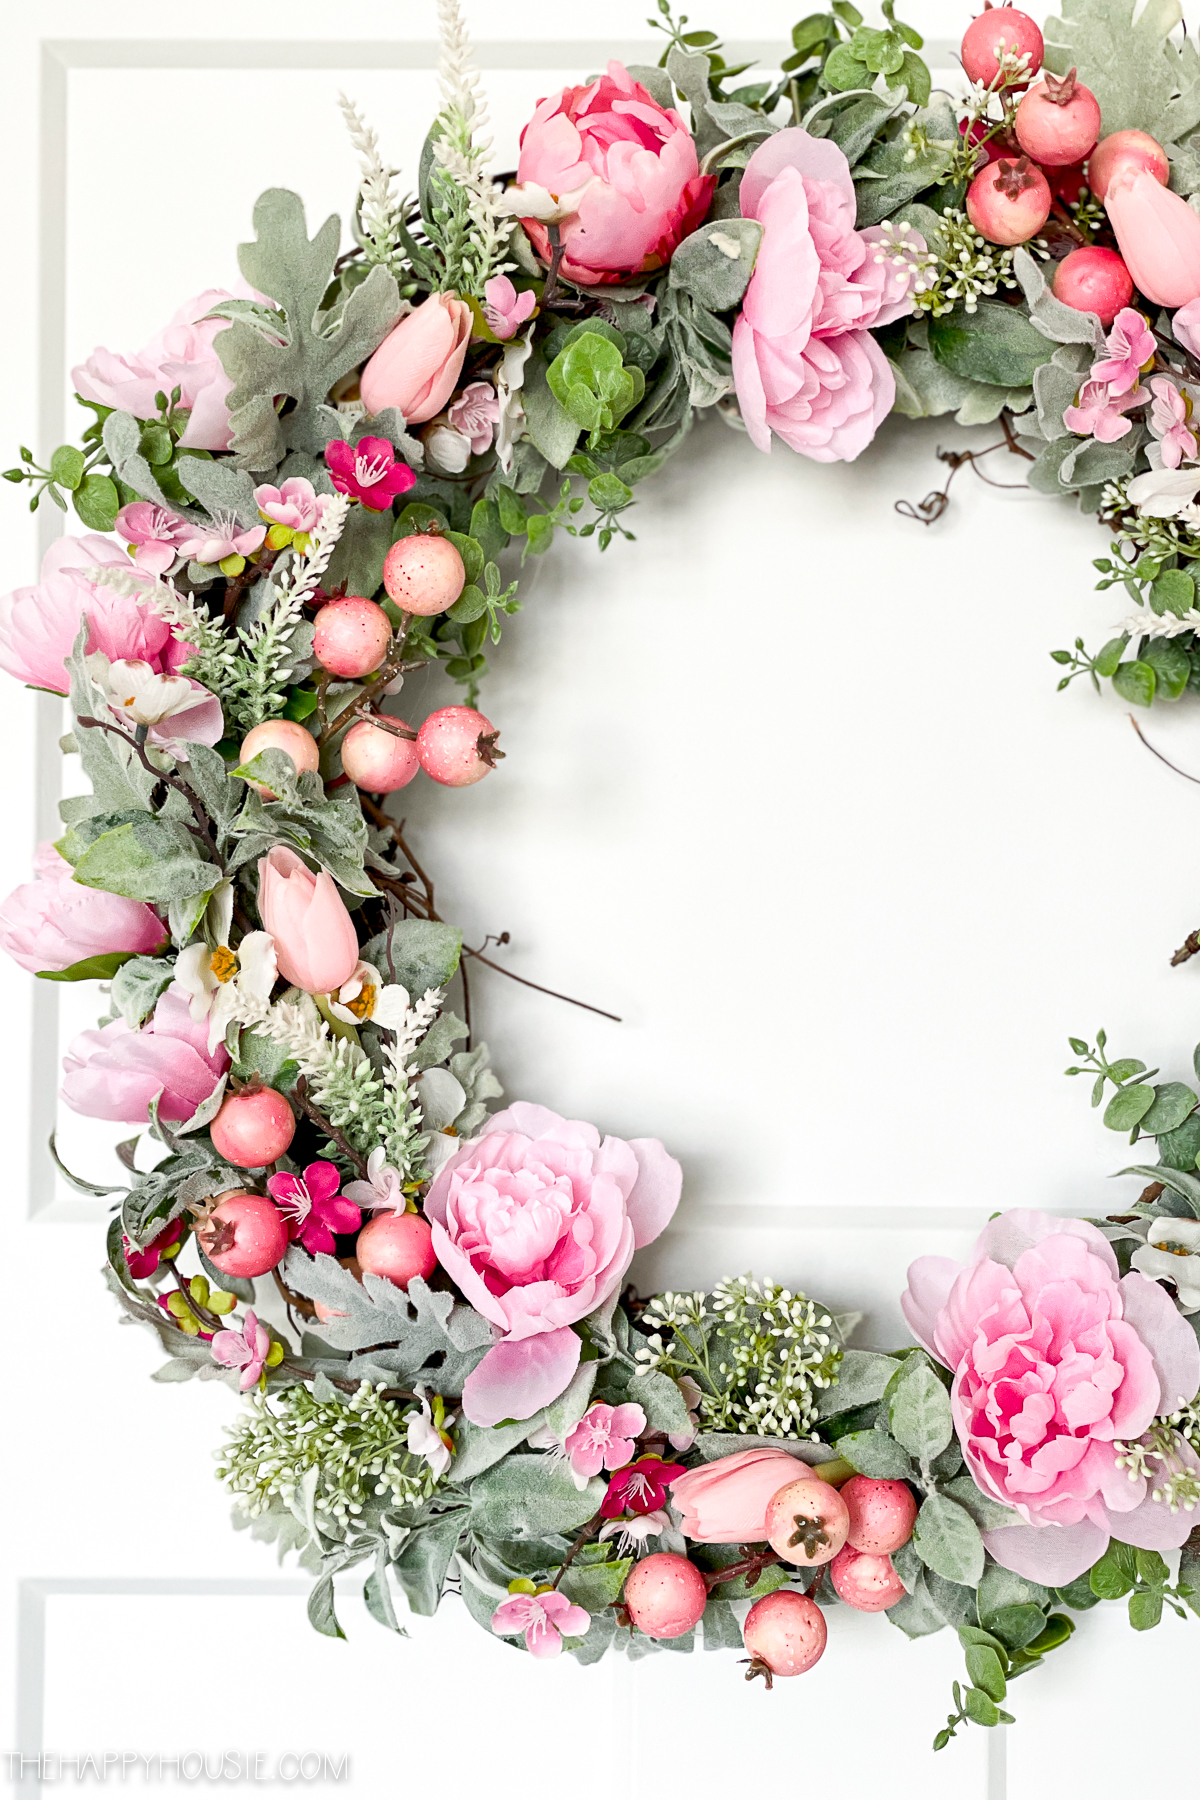 Full Floral DIY Spring Wreath | The Happy Housie